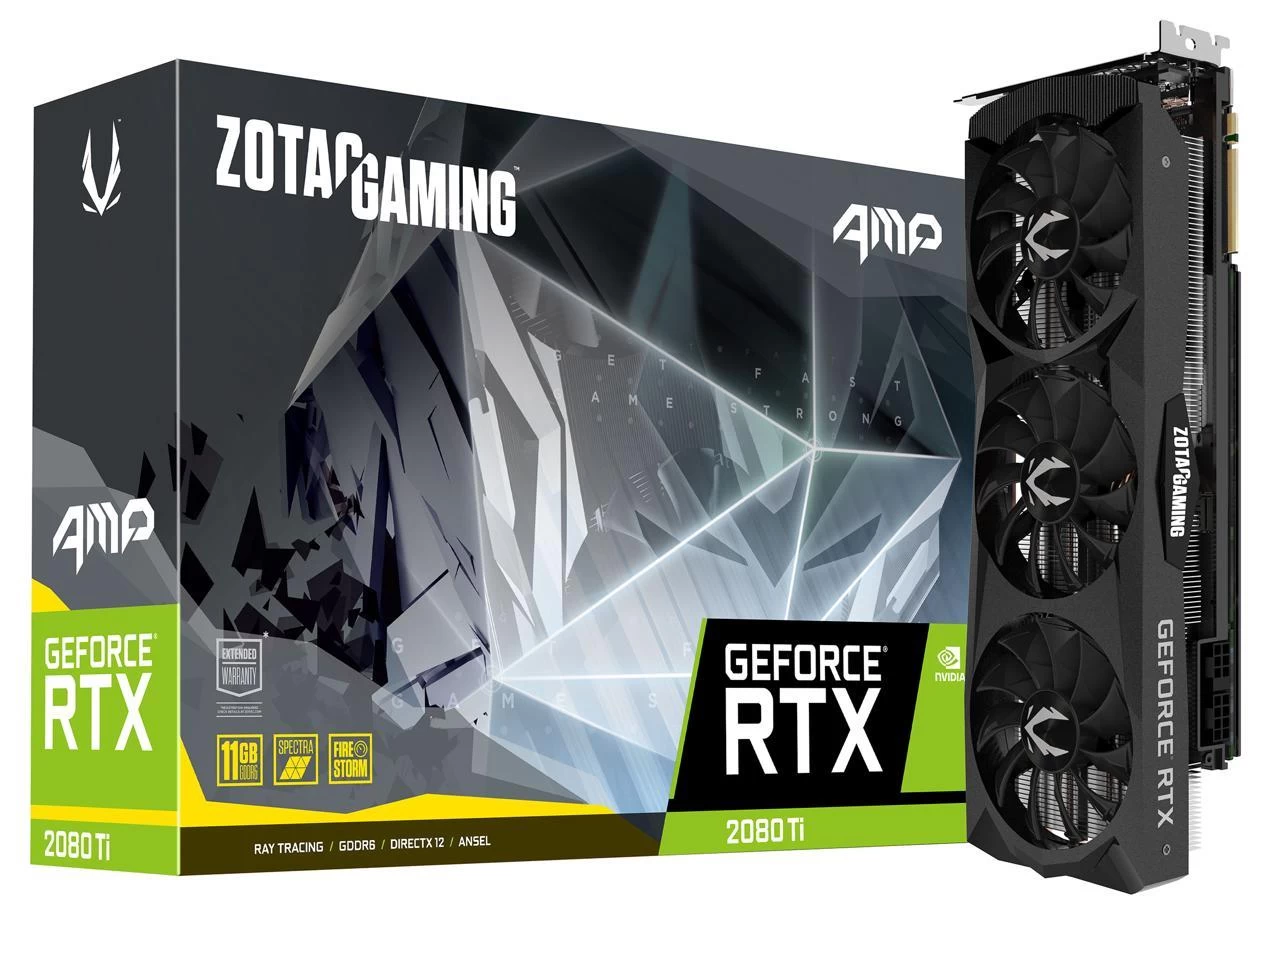 ZOTAC GAMING GeForce RTX 2080 Ti AMP Package